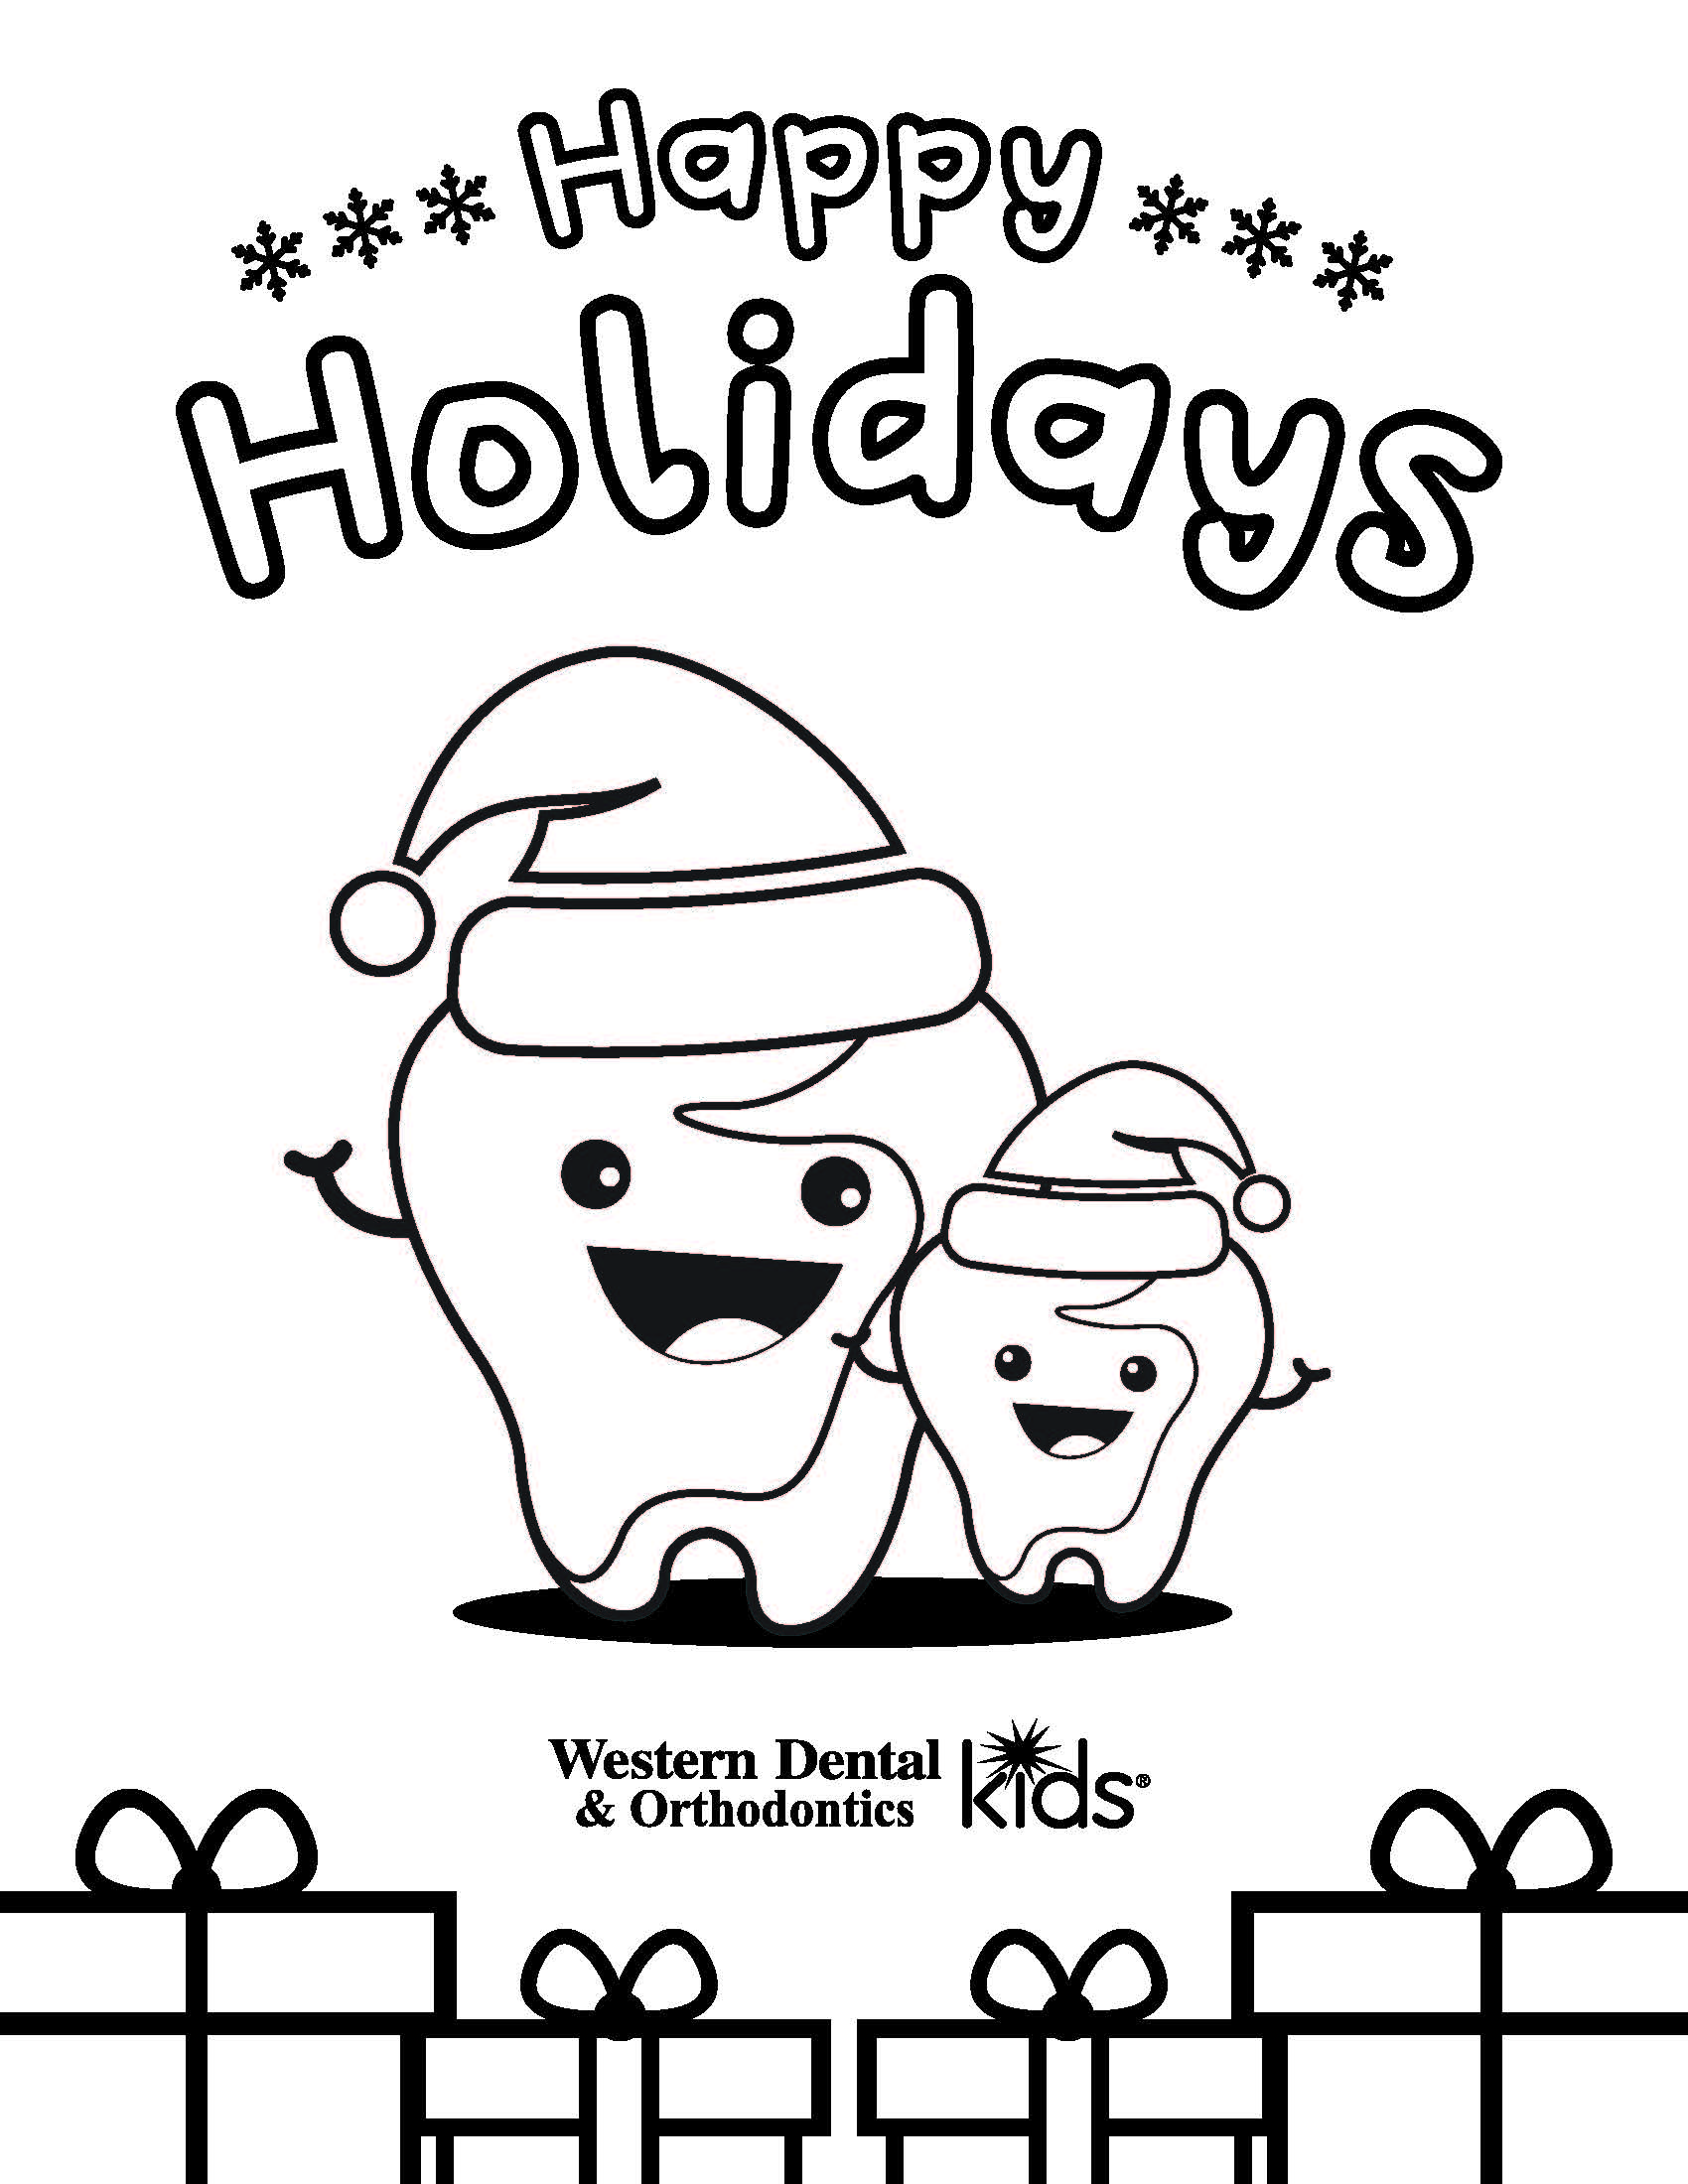 Western Dental Kids - Happy Holidays Coloring Sheet